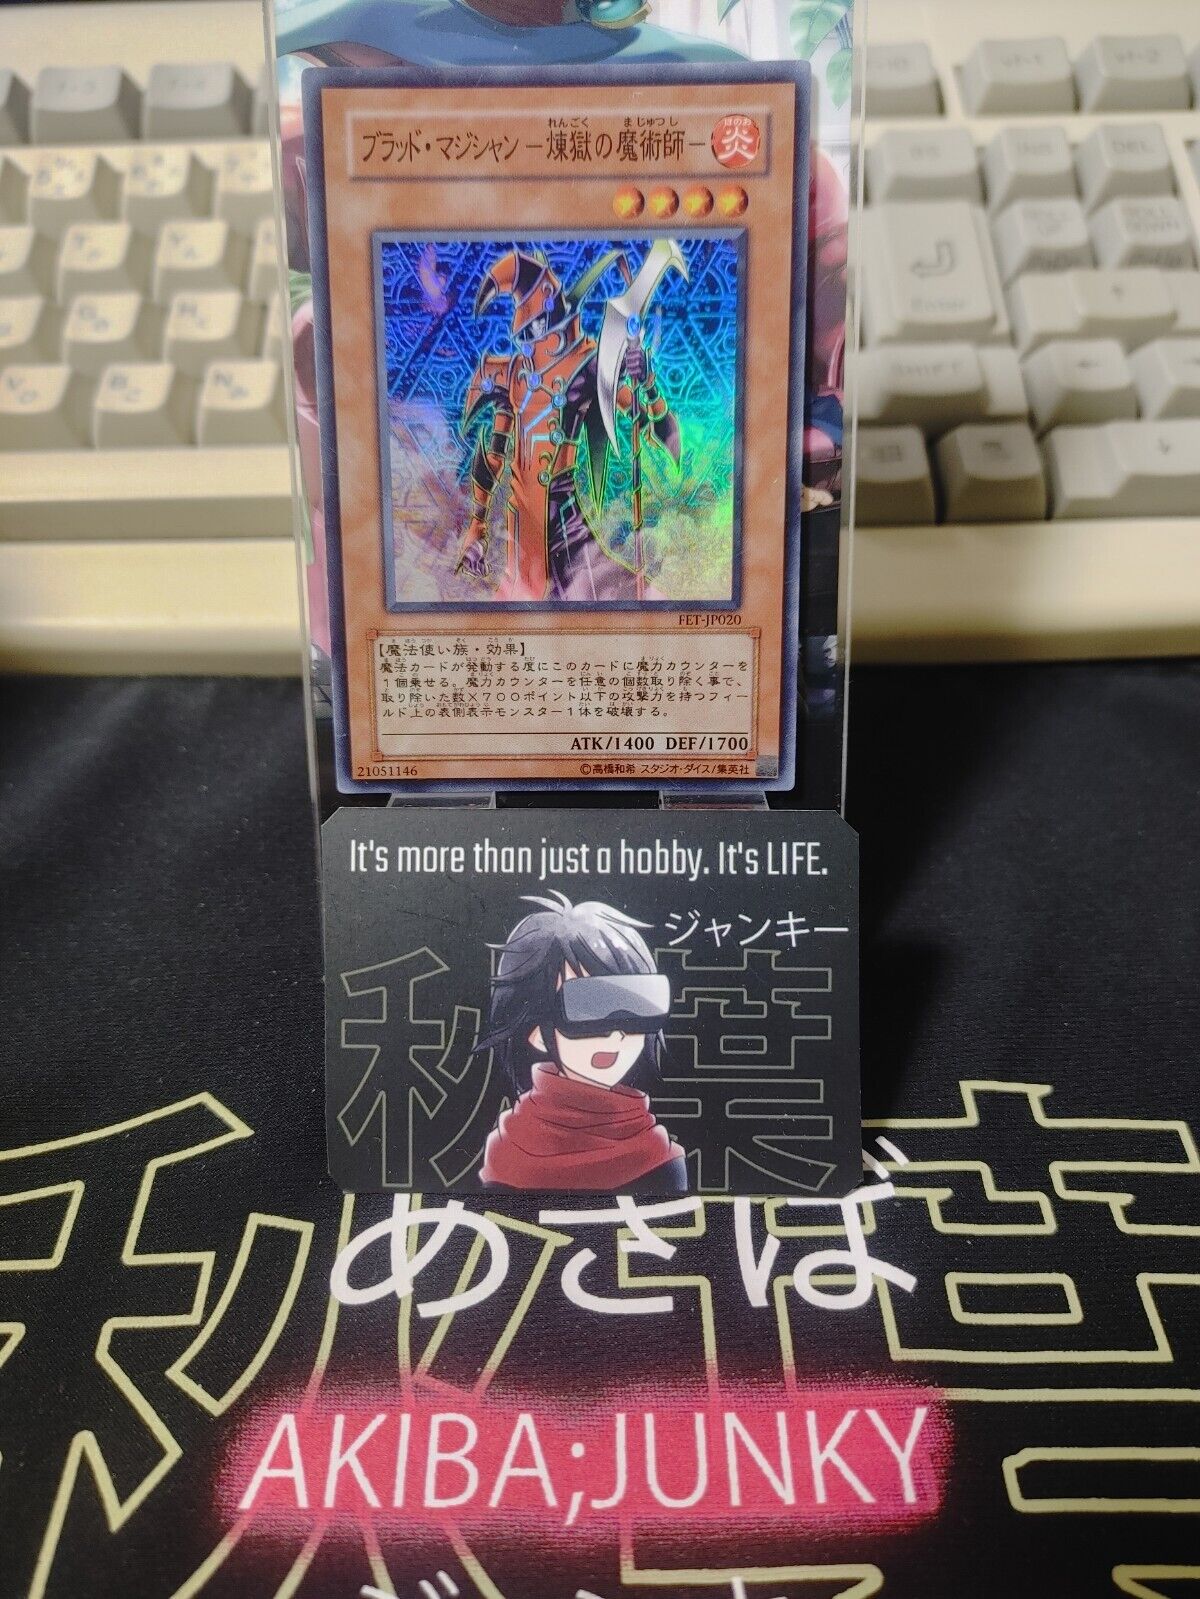 Blast Magician Yu-Gi-Oh Yugioh Super Rare  FET-JP020 Konami JAPAN Release